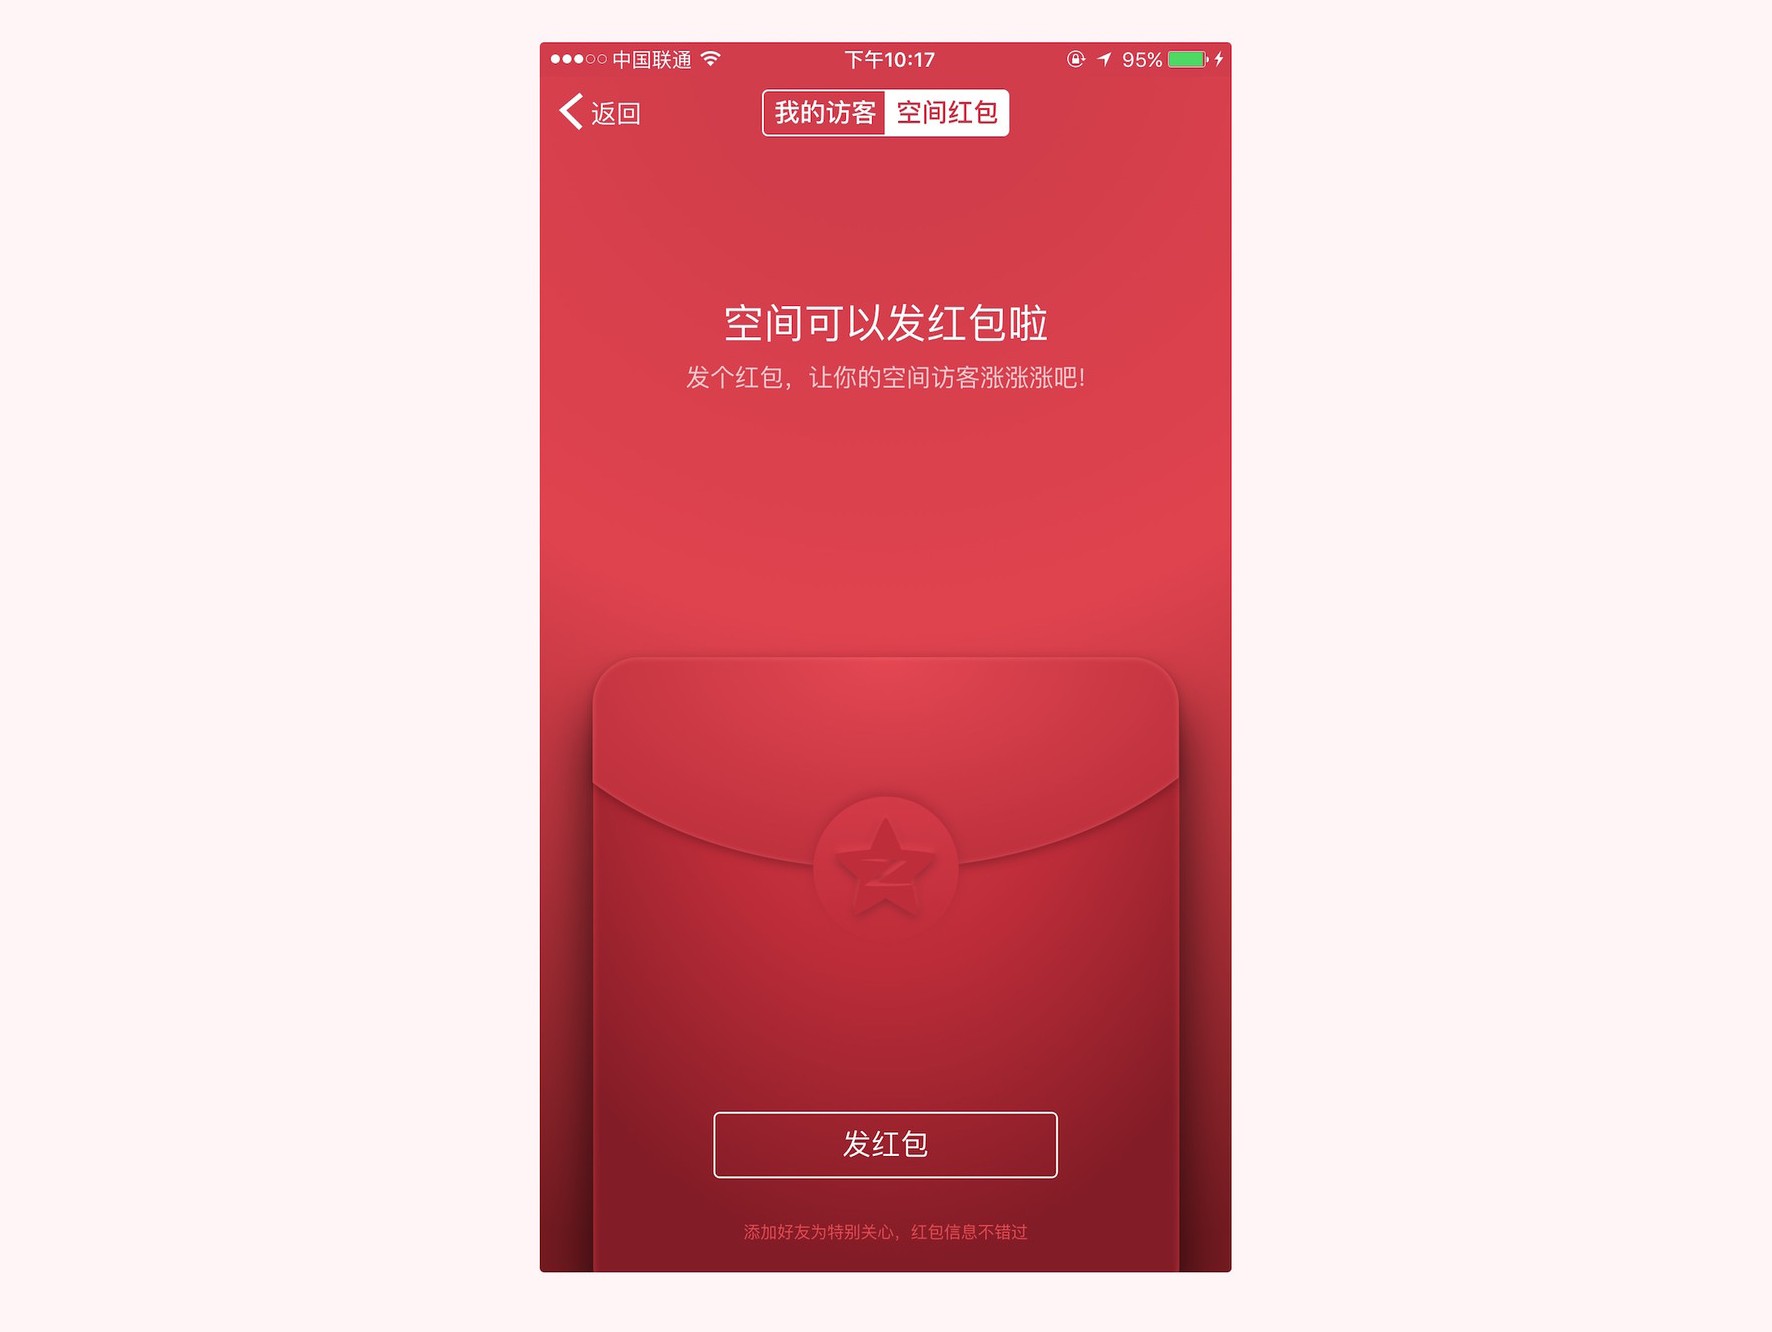 QQ假红包制作分享教程 引流红包卡片-应用-分享库